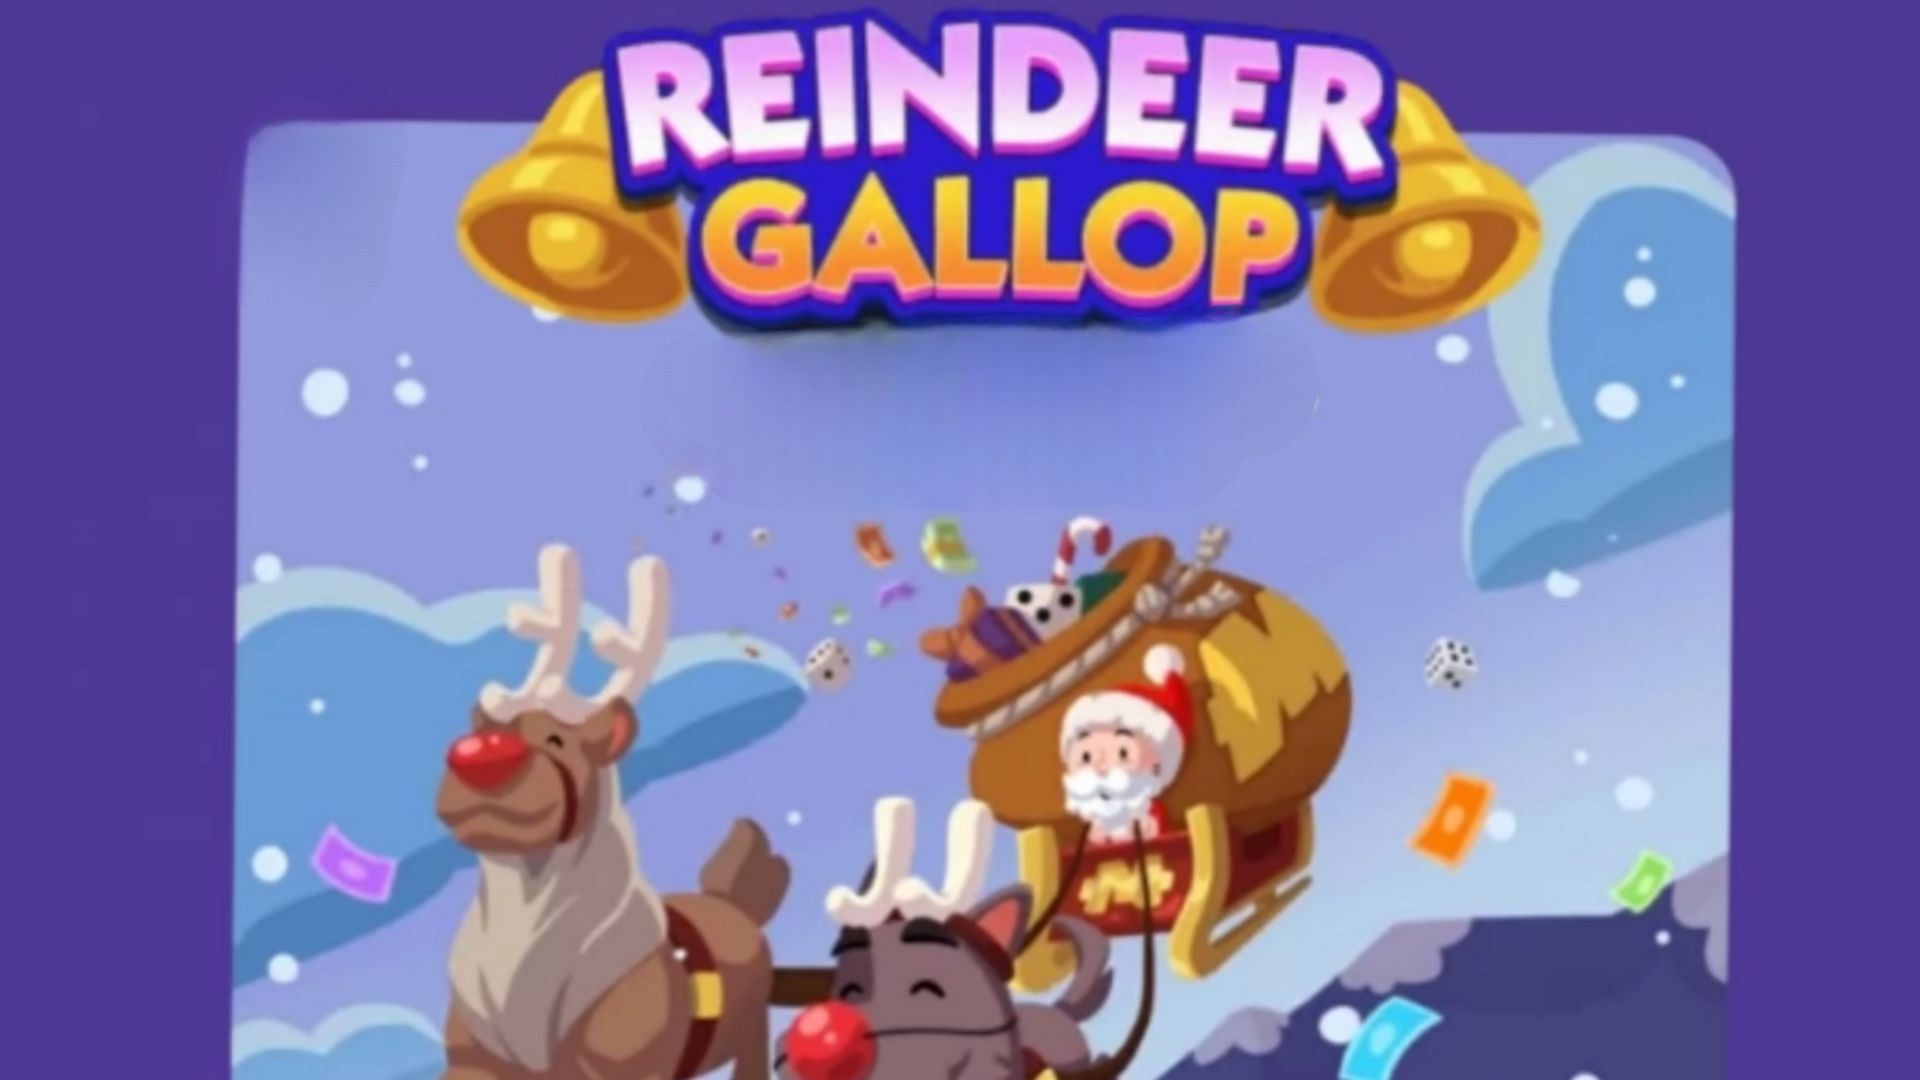 Monopoly Go Reindeer Gallop tournament: Rewards, milestones, and more